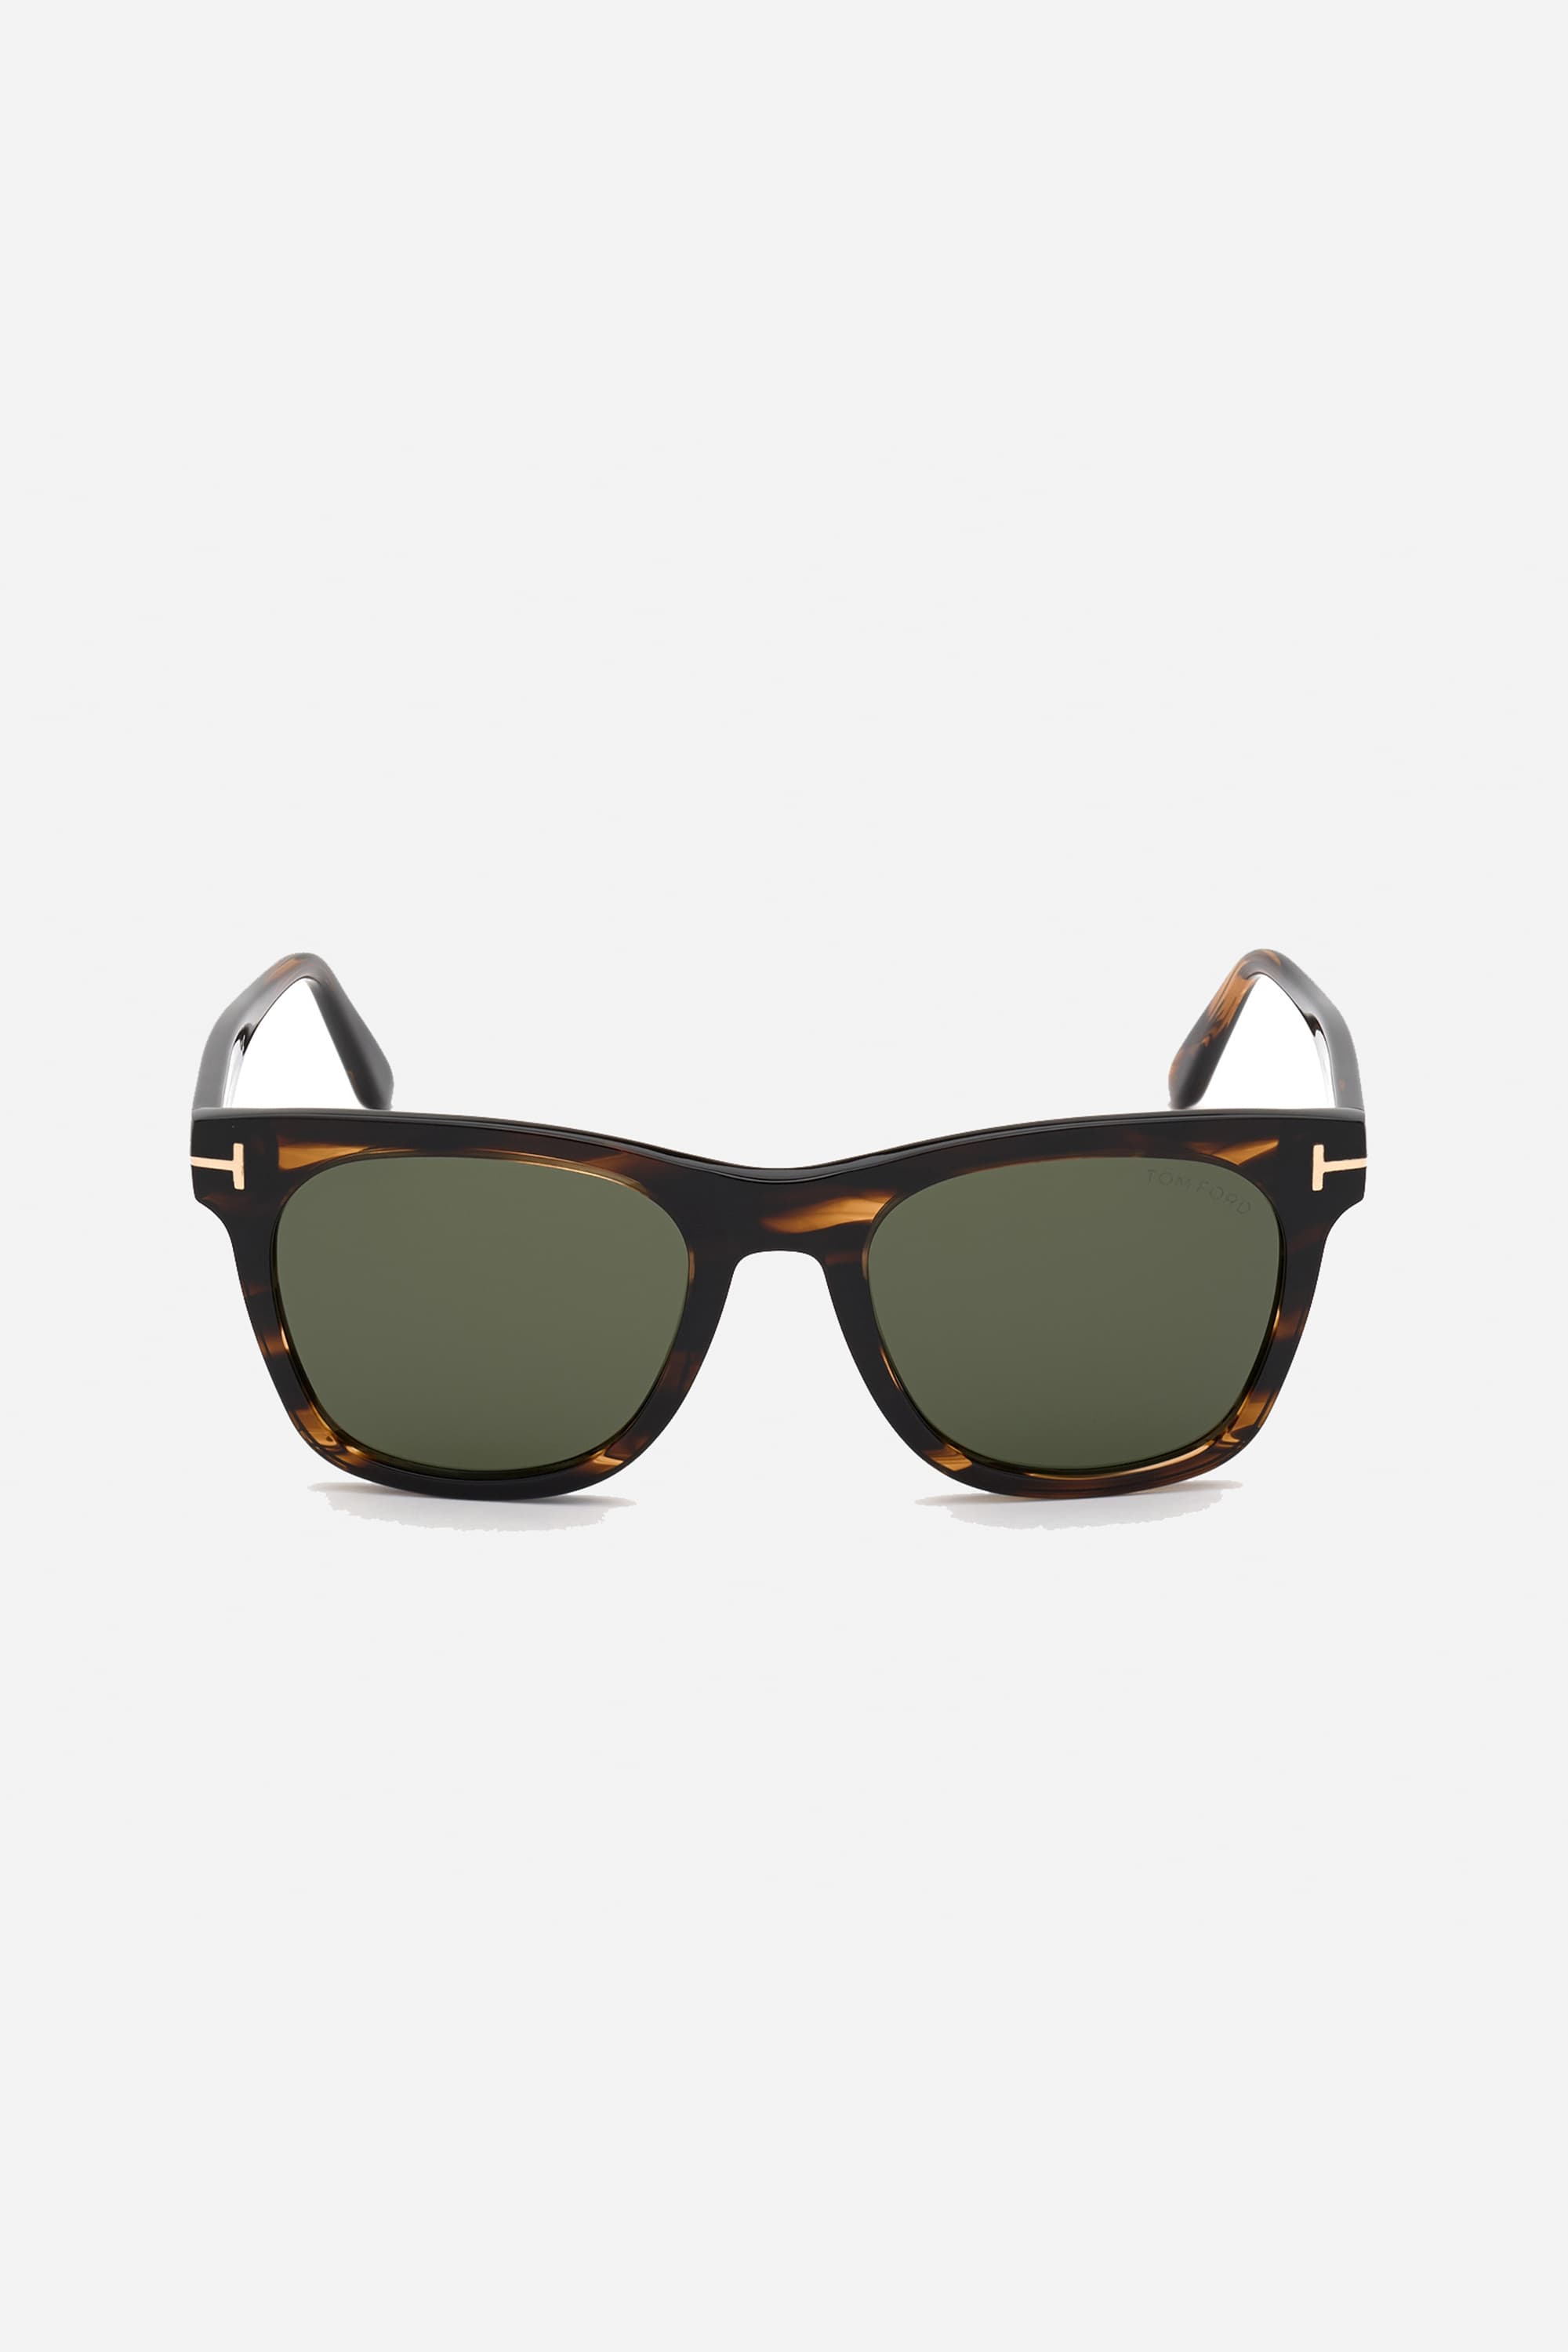 Tom Ford havana classic sunglasses - Eyewear Club